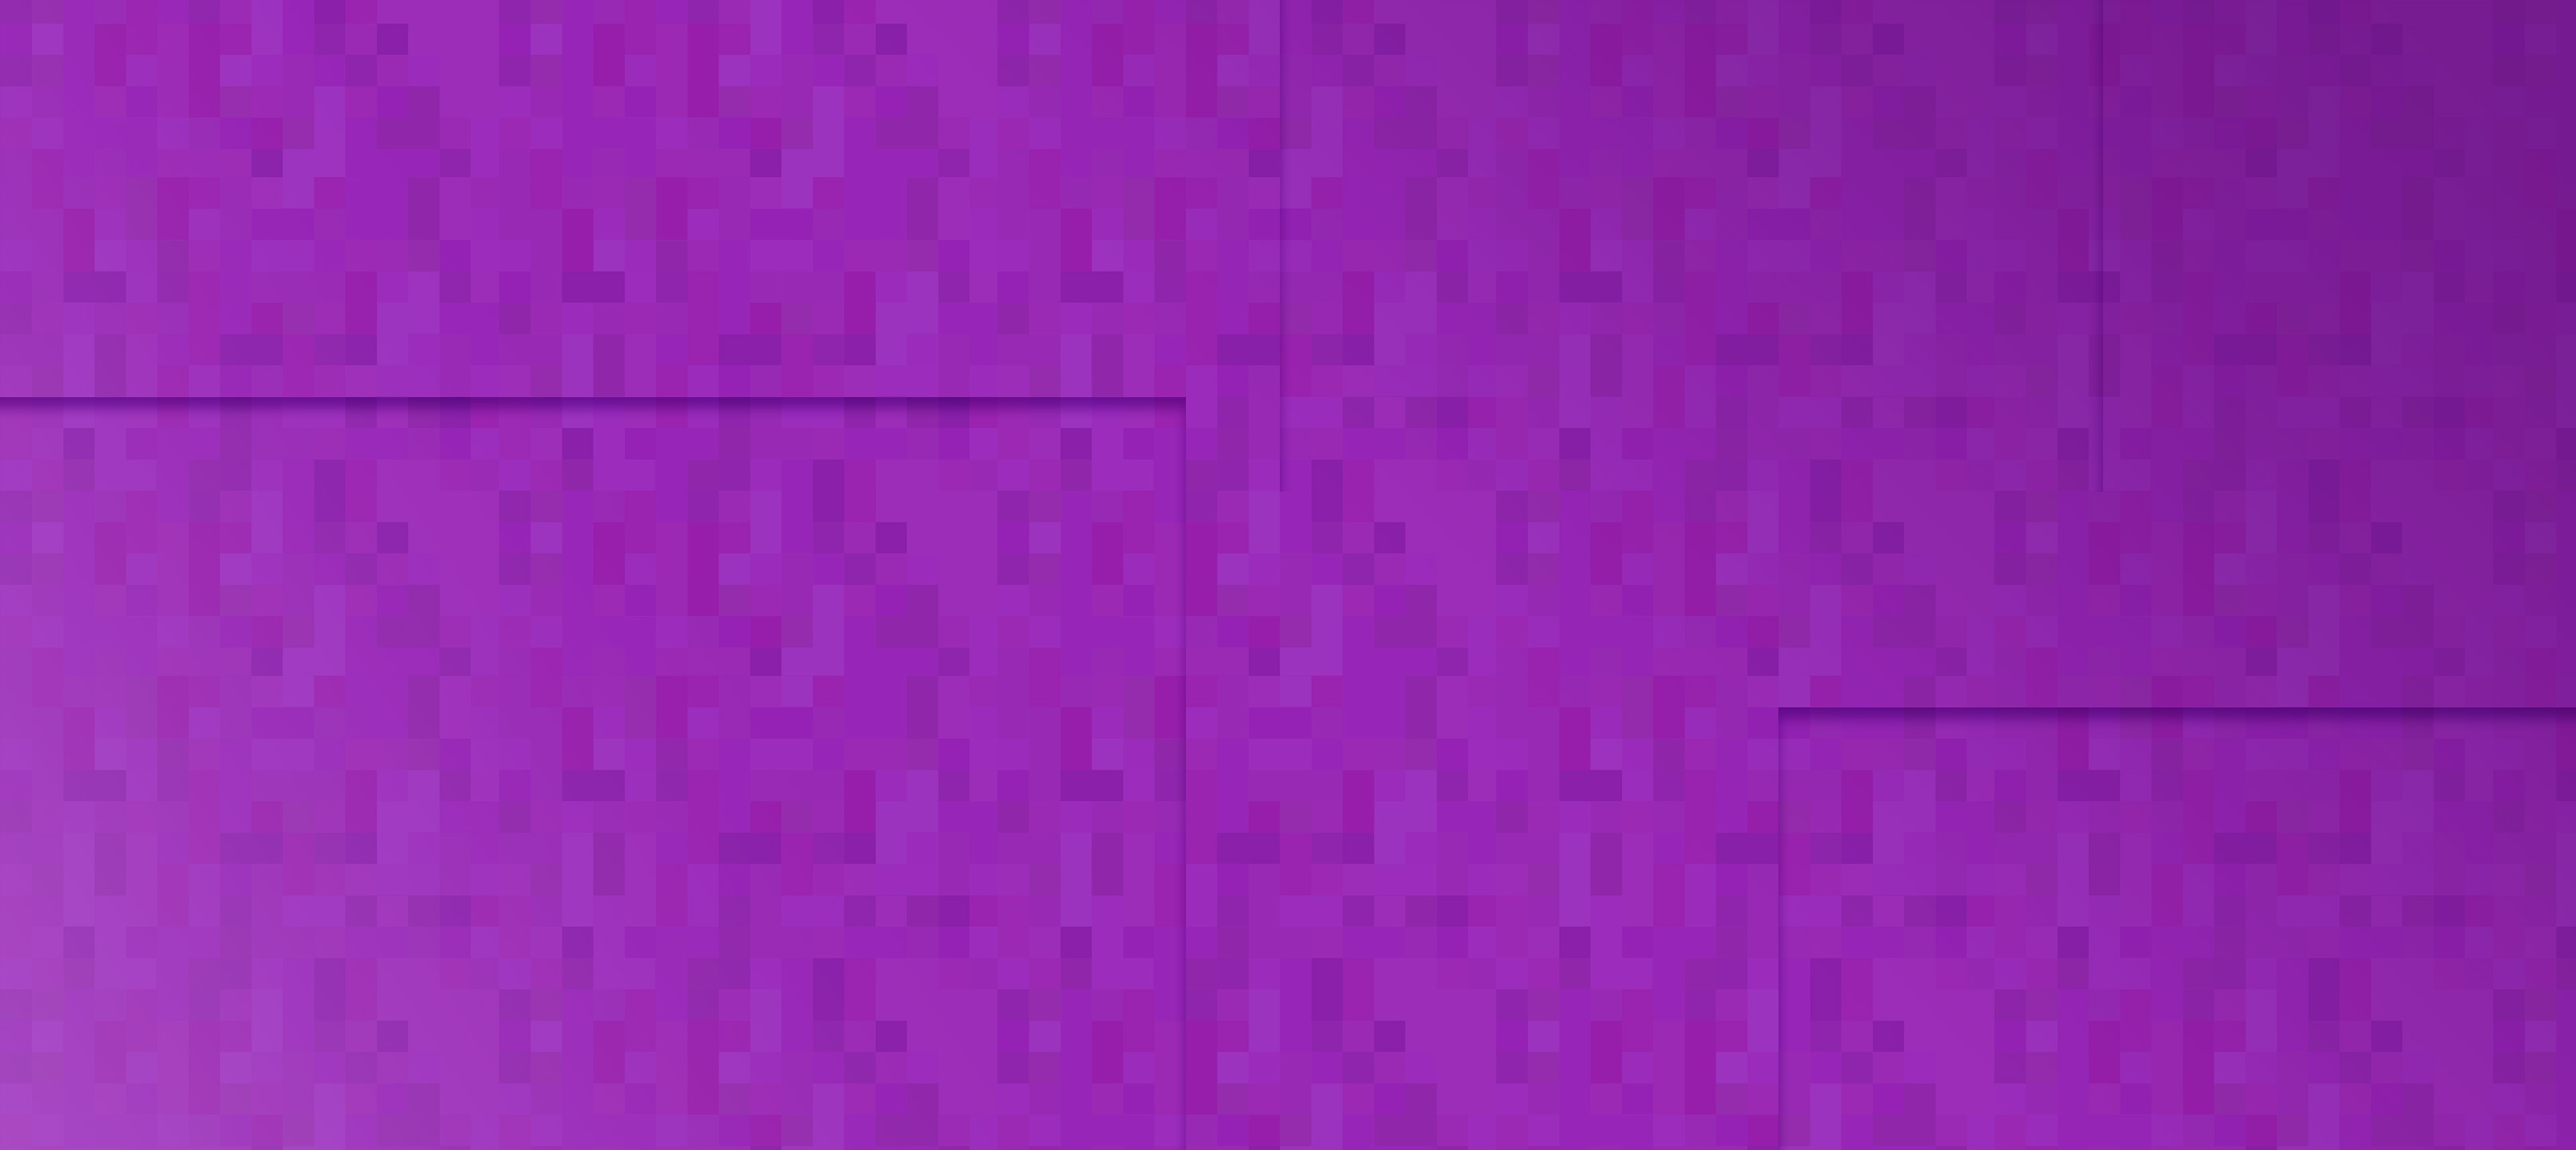 Pixel Art Textured Background